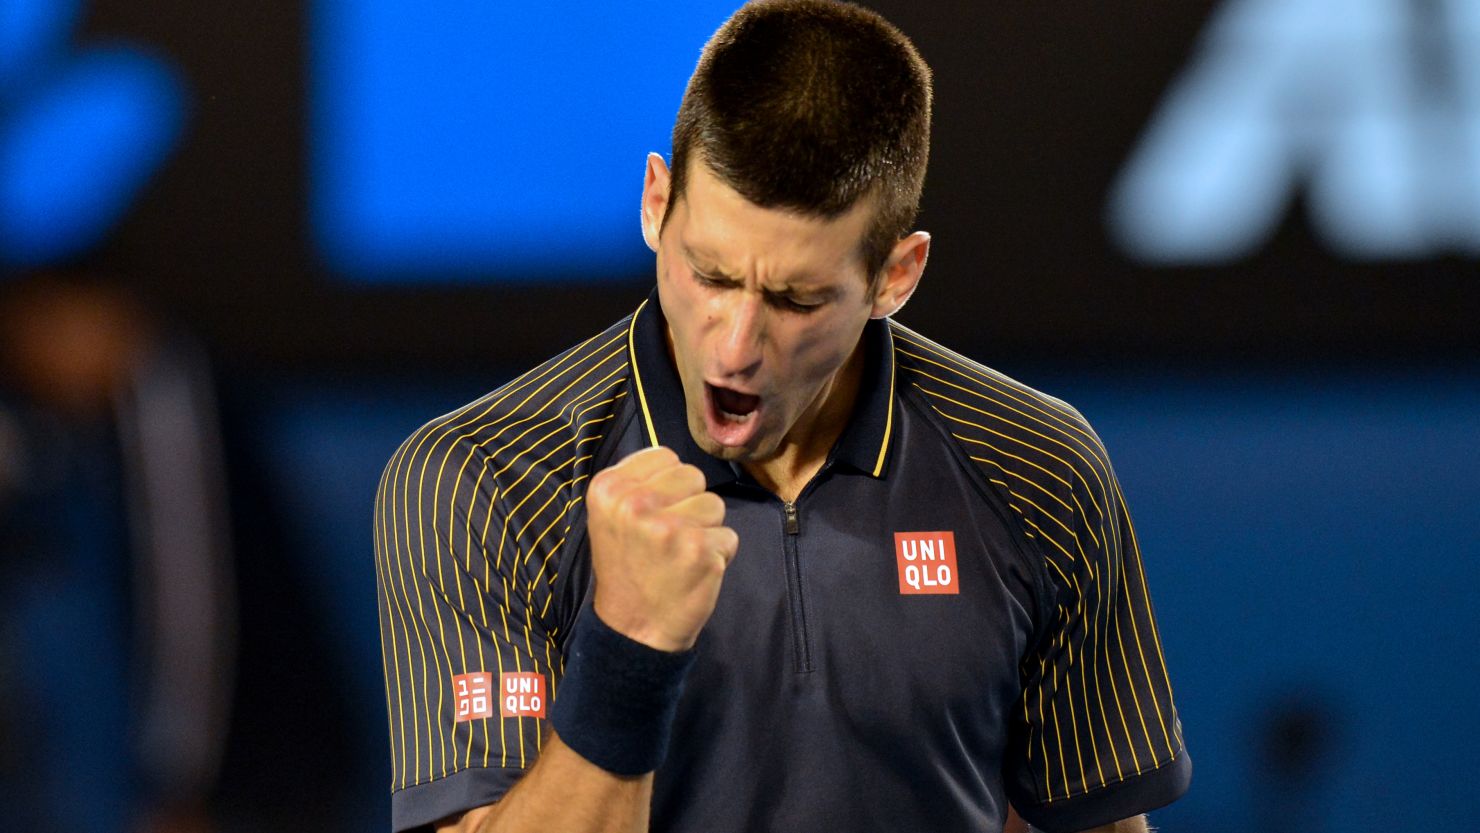 Novak Djokovic survived an epic match with Stanislas Wawrinhka to maintain his Australian Open defense